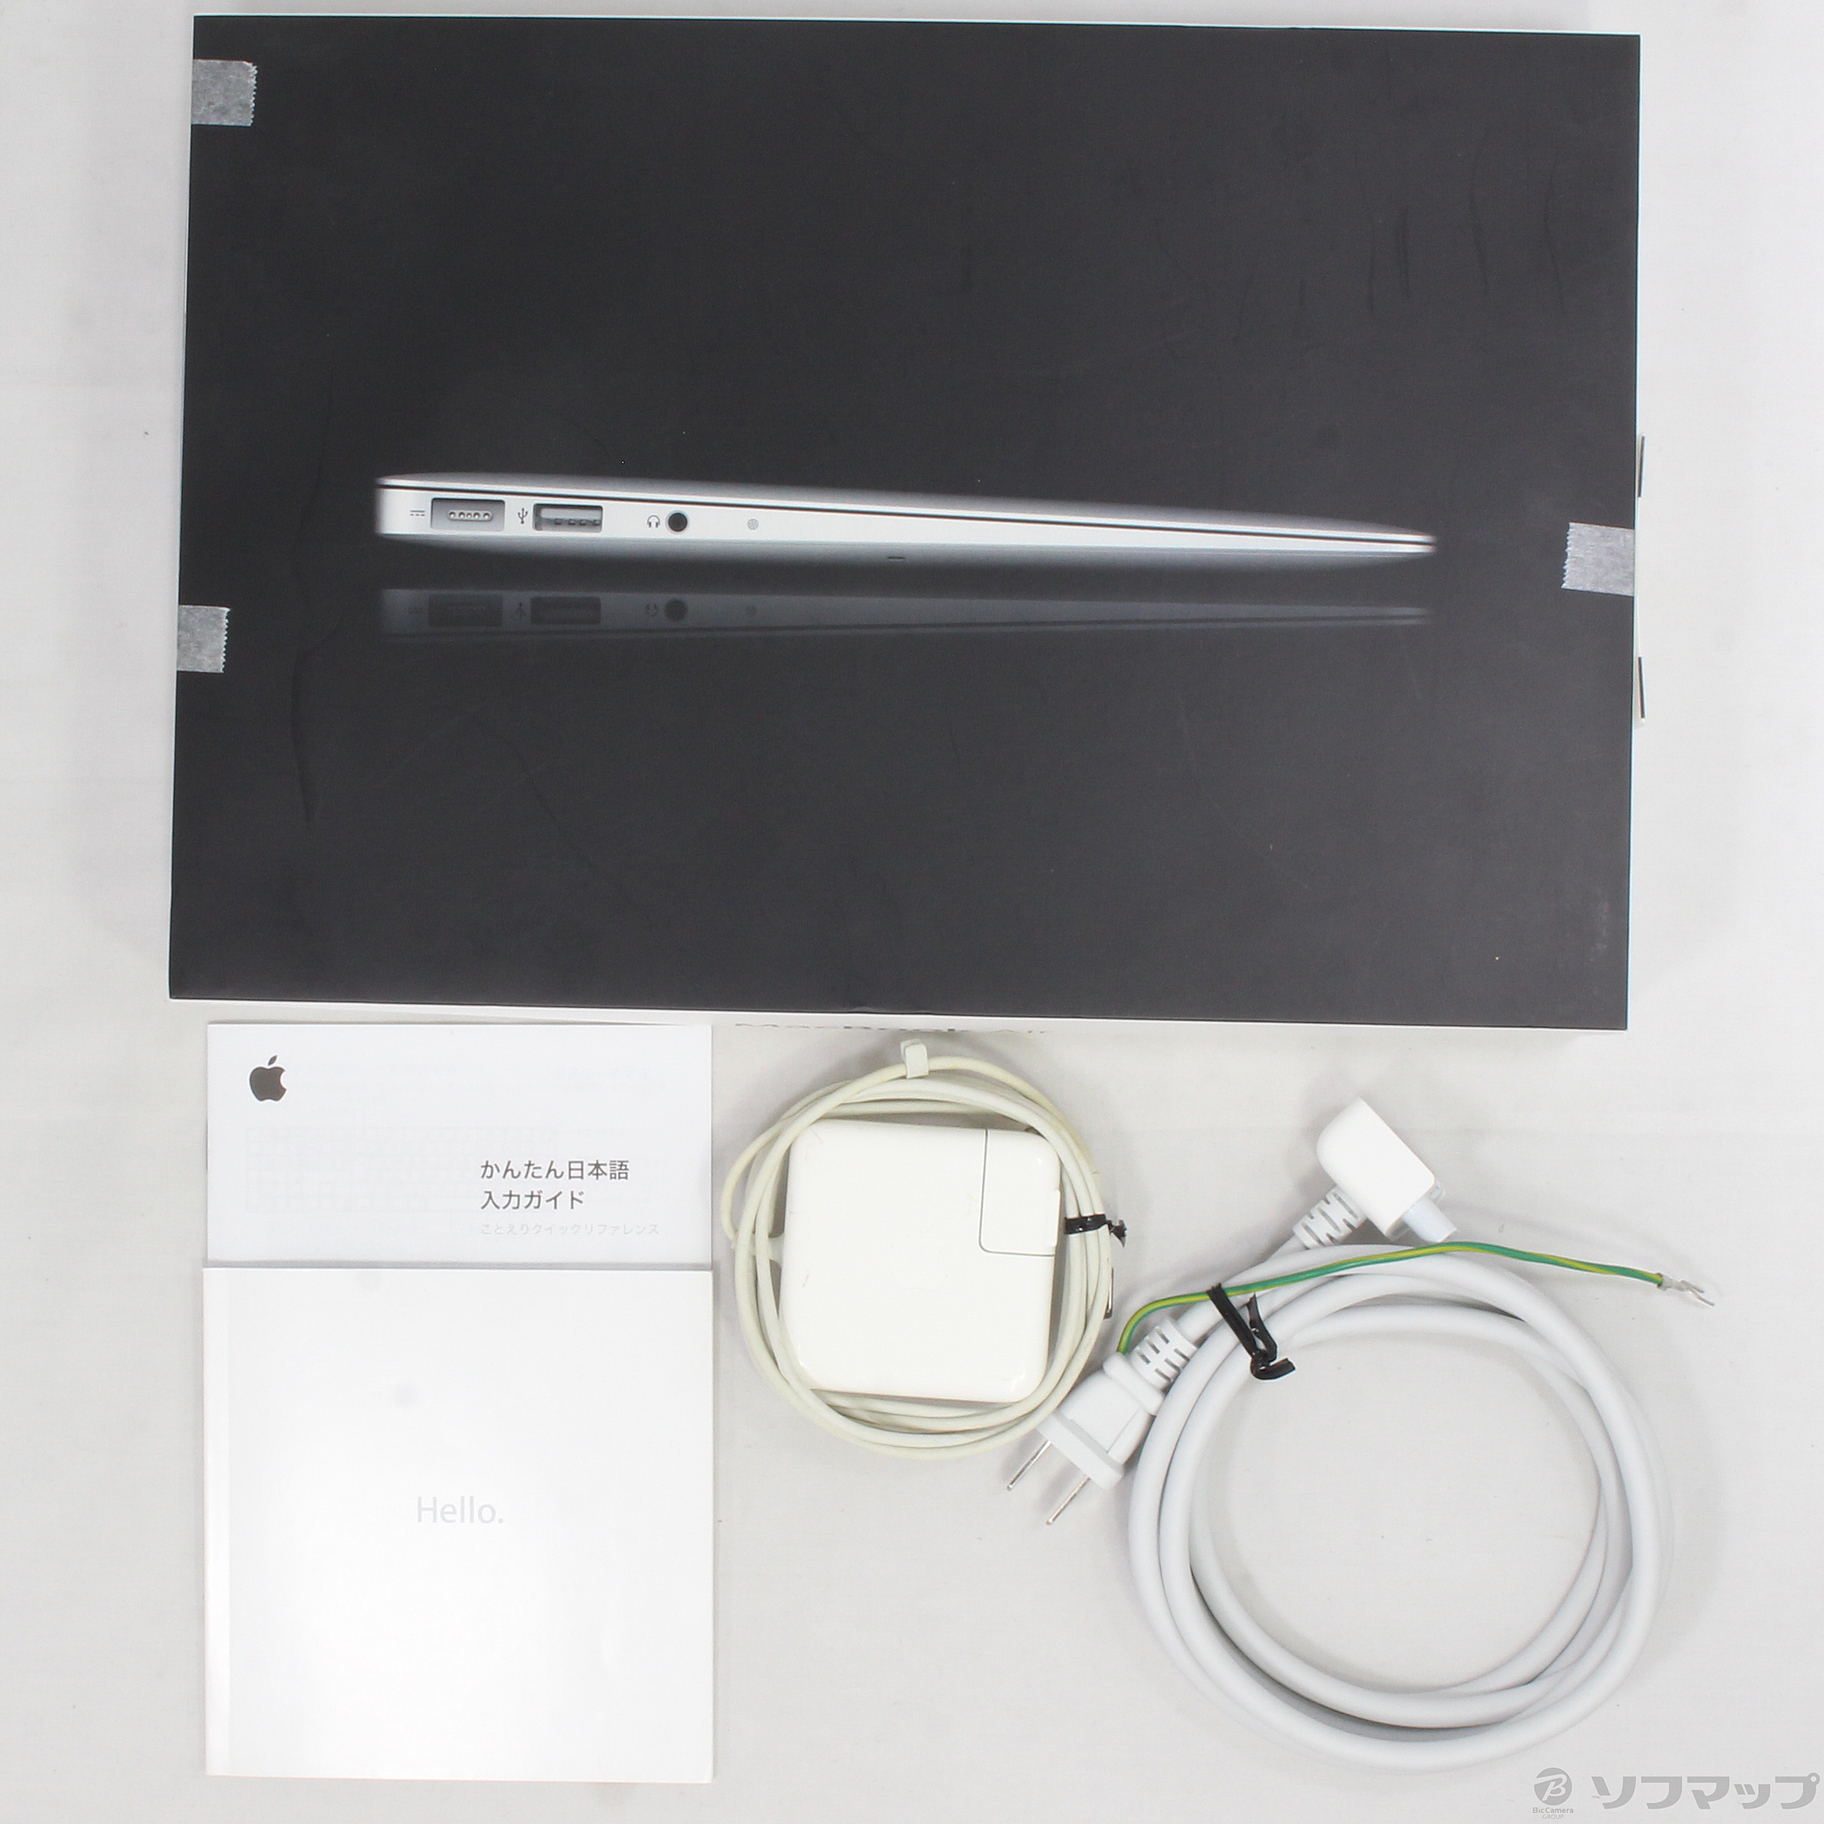 中古】MacBook Air 11.6-inch Mid 2011 MC969J／A Core_i5 1.6GHz 4GB